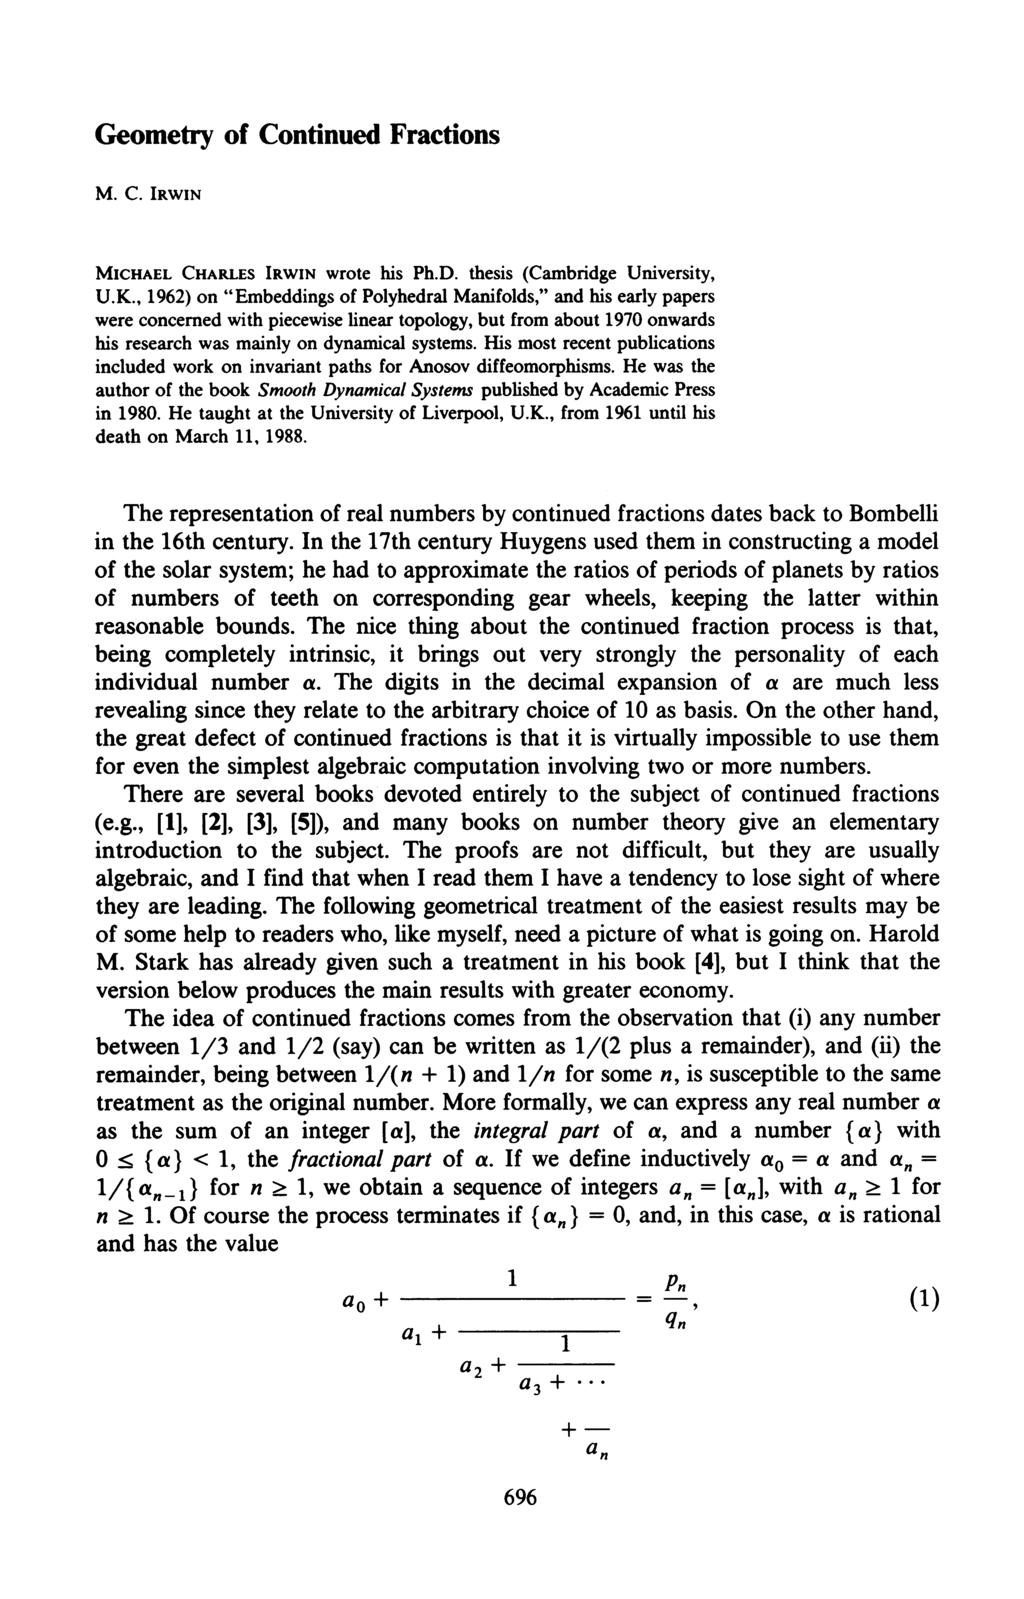 Geometry of Continued Fractions M. C. IRWIN MICHAEL CHARLES IRWIN wrote his Ph.D. thesis (Cambridge University, U.K.